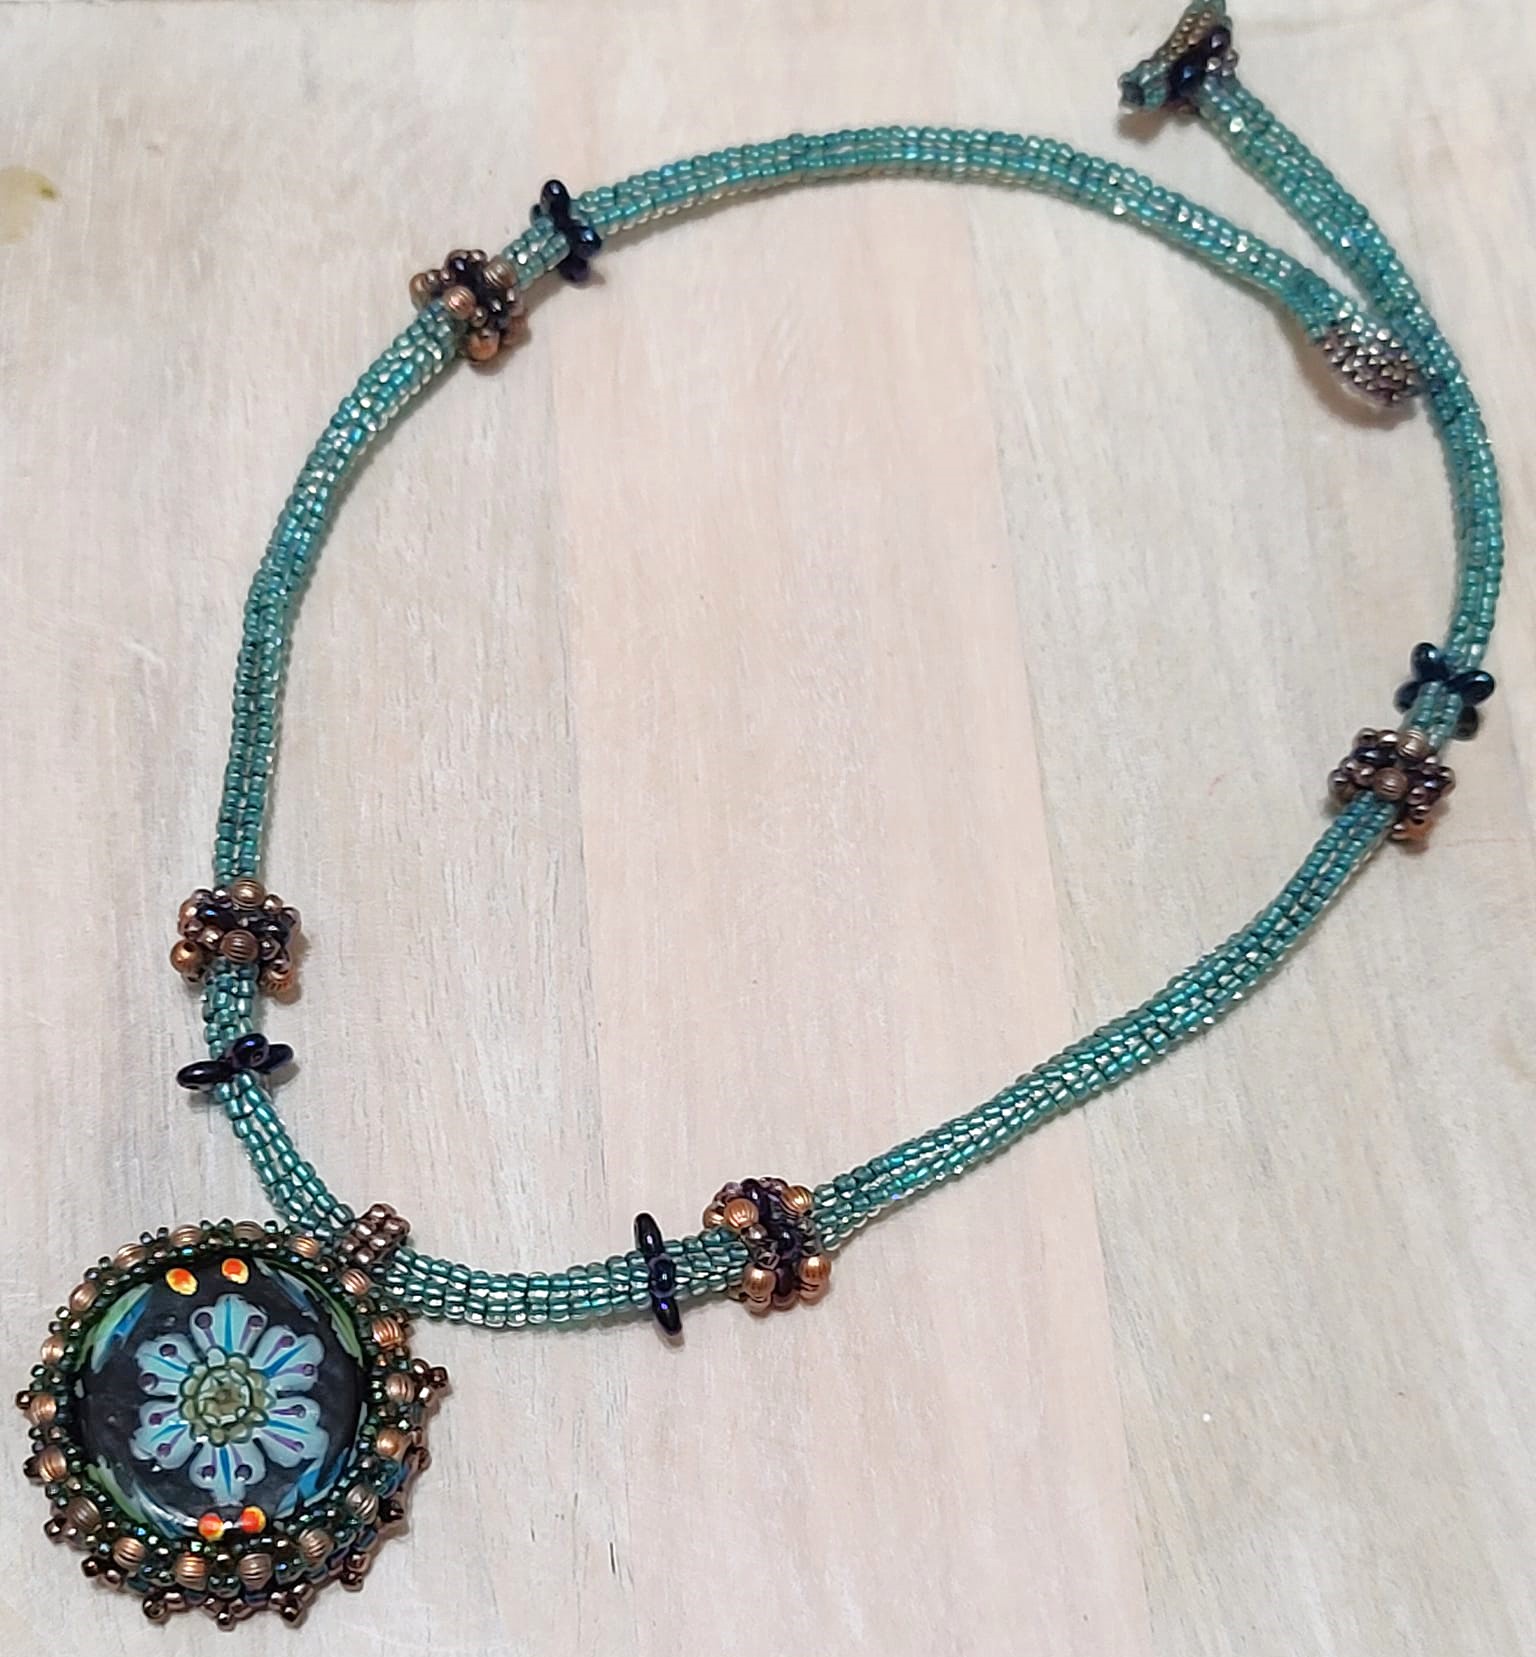 Center ceramic bead embroidery pendant necklace